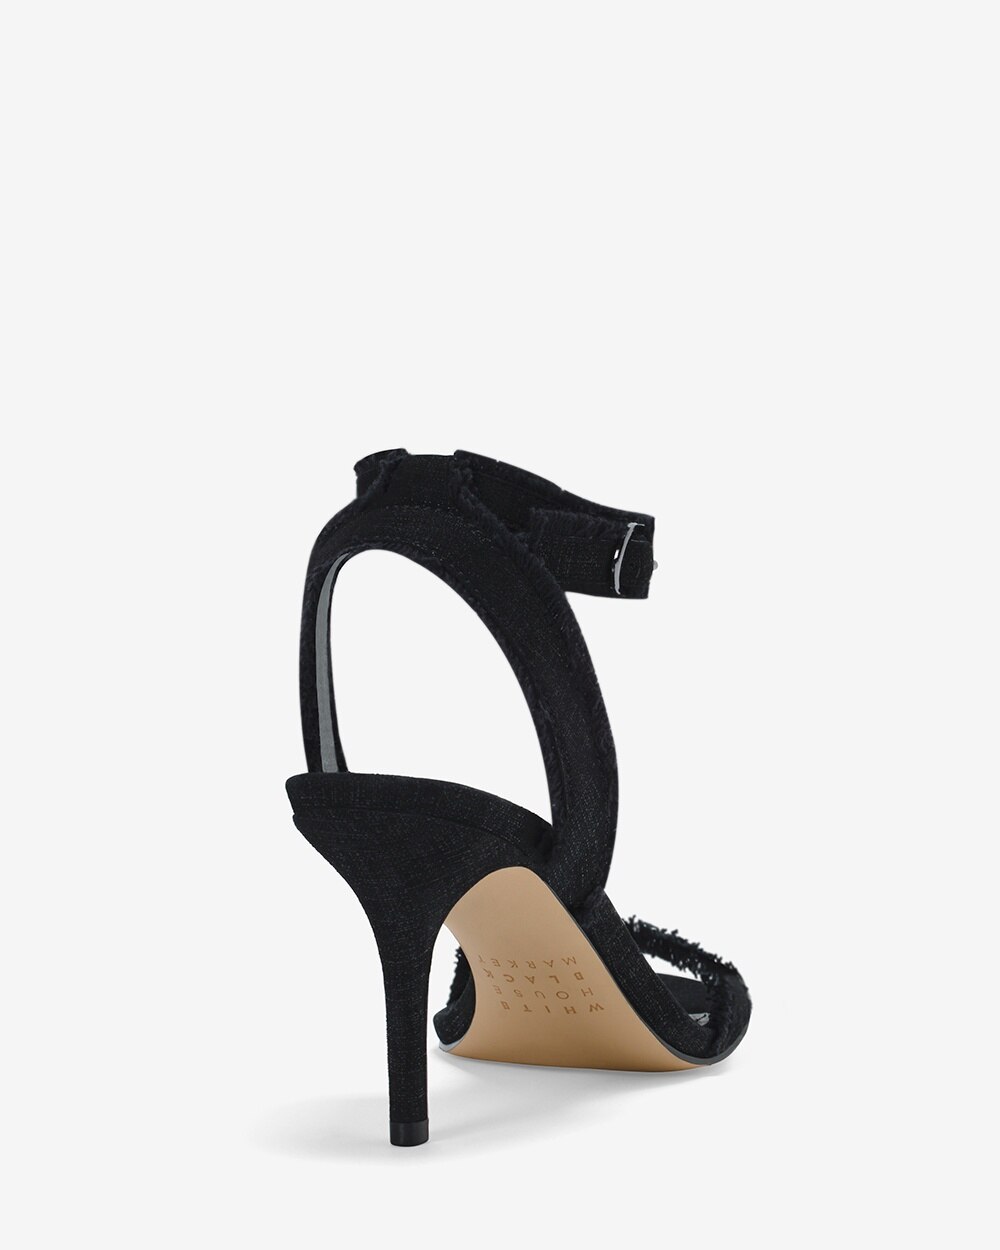 Black Strappy Mid-Heel Sandals - White House Black Market